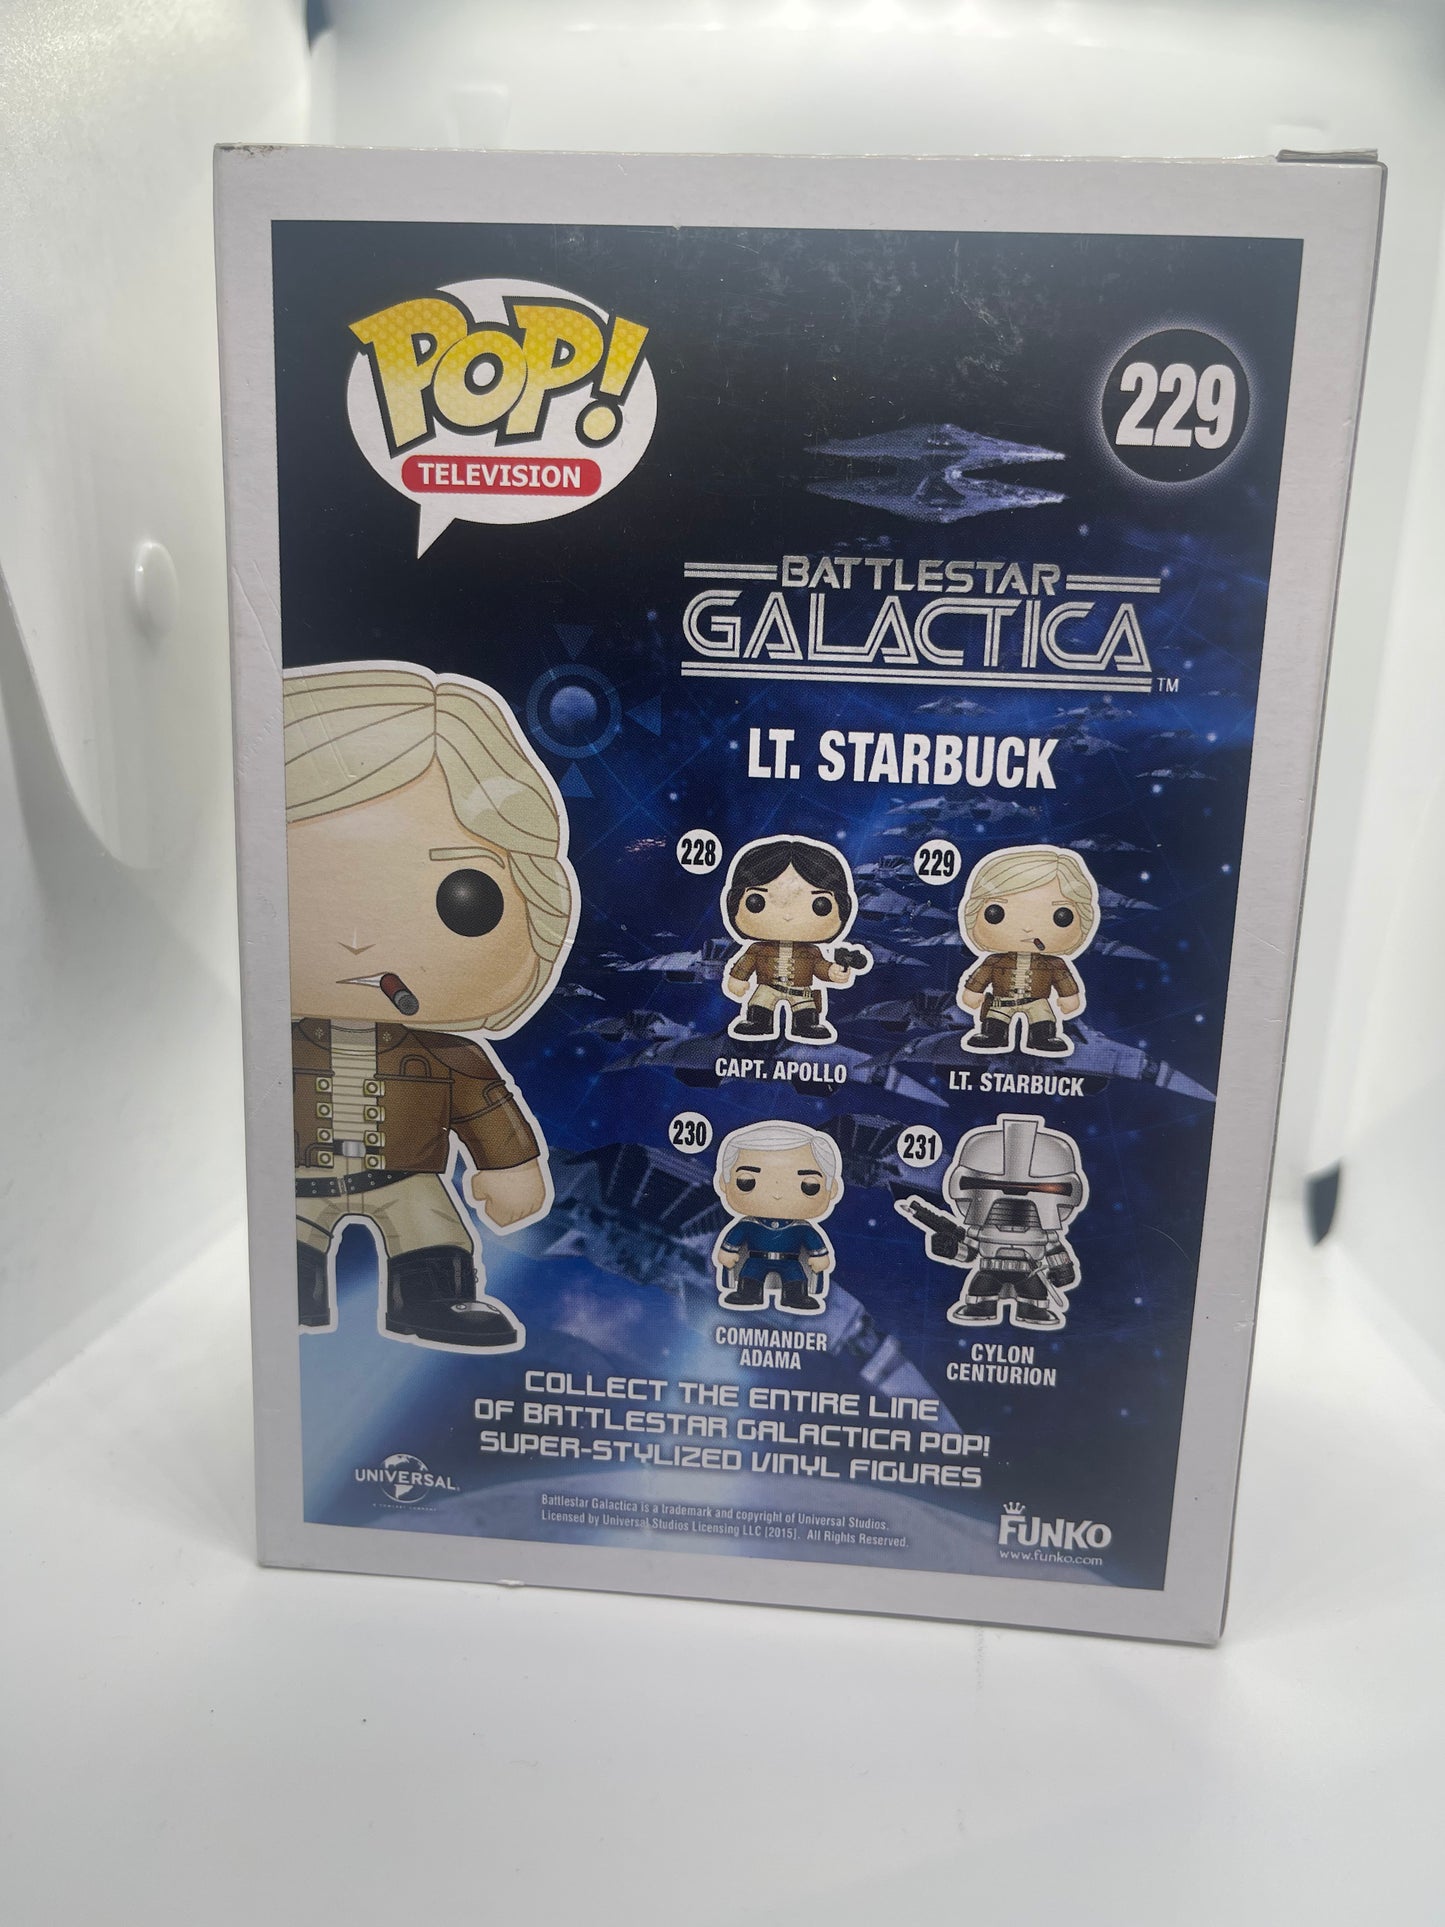 Battlestar Galactica 229 Lieutenant Starbuck Funko Pop! Vinyl Figure (Damaged Box)